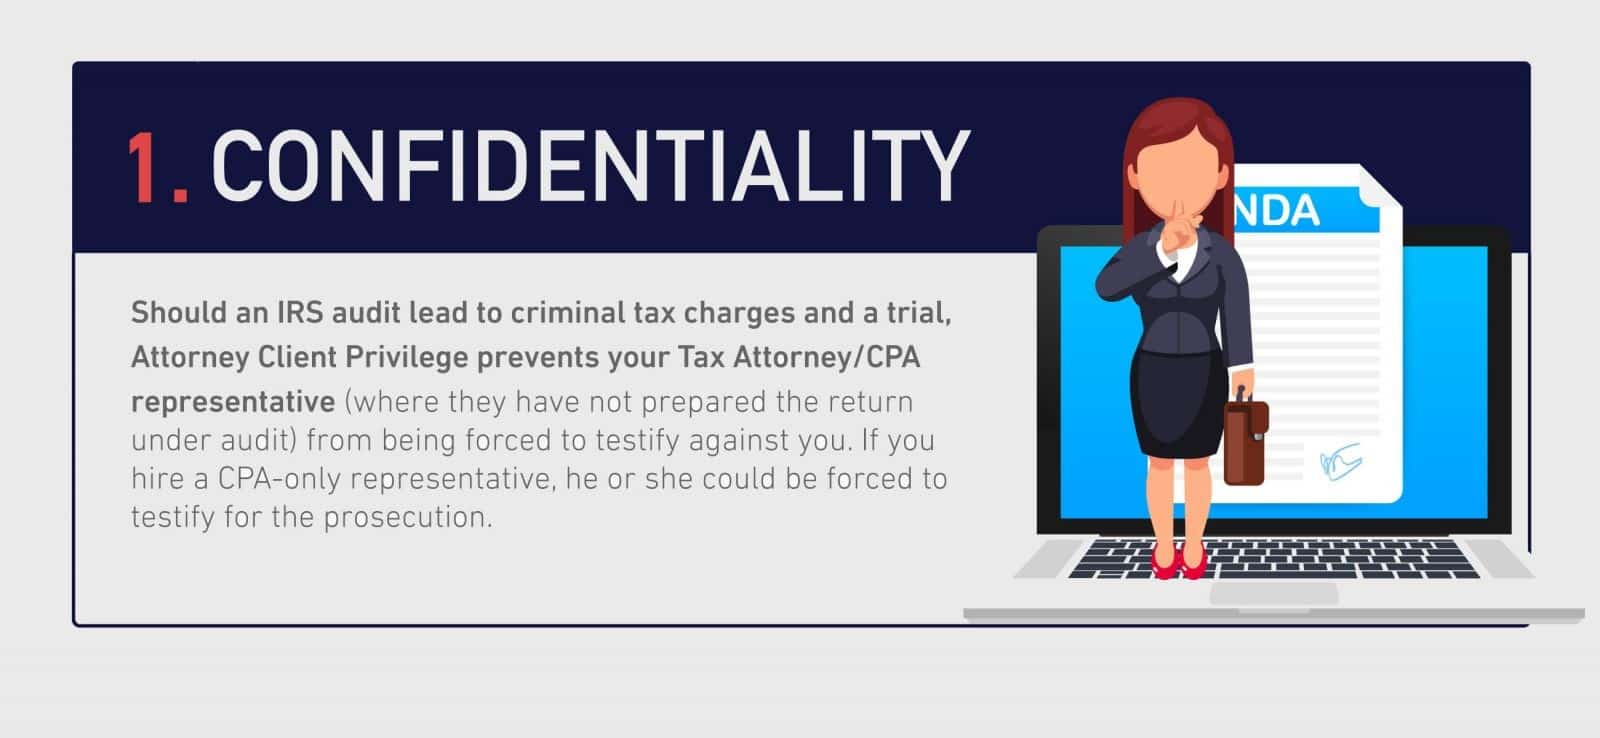 Confidentiality-klasing-associates-carlsbad-tax-attorney